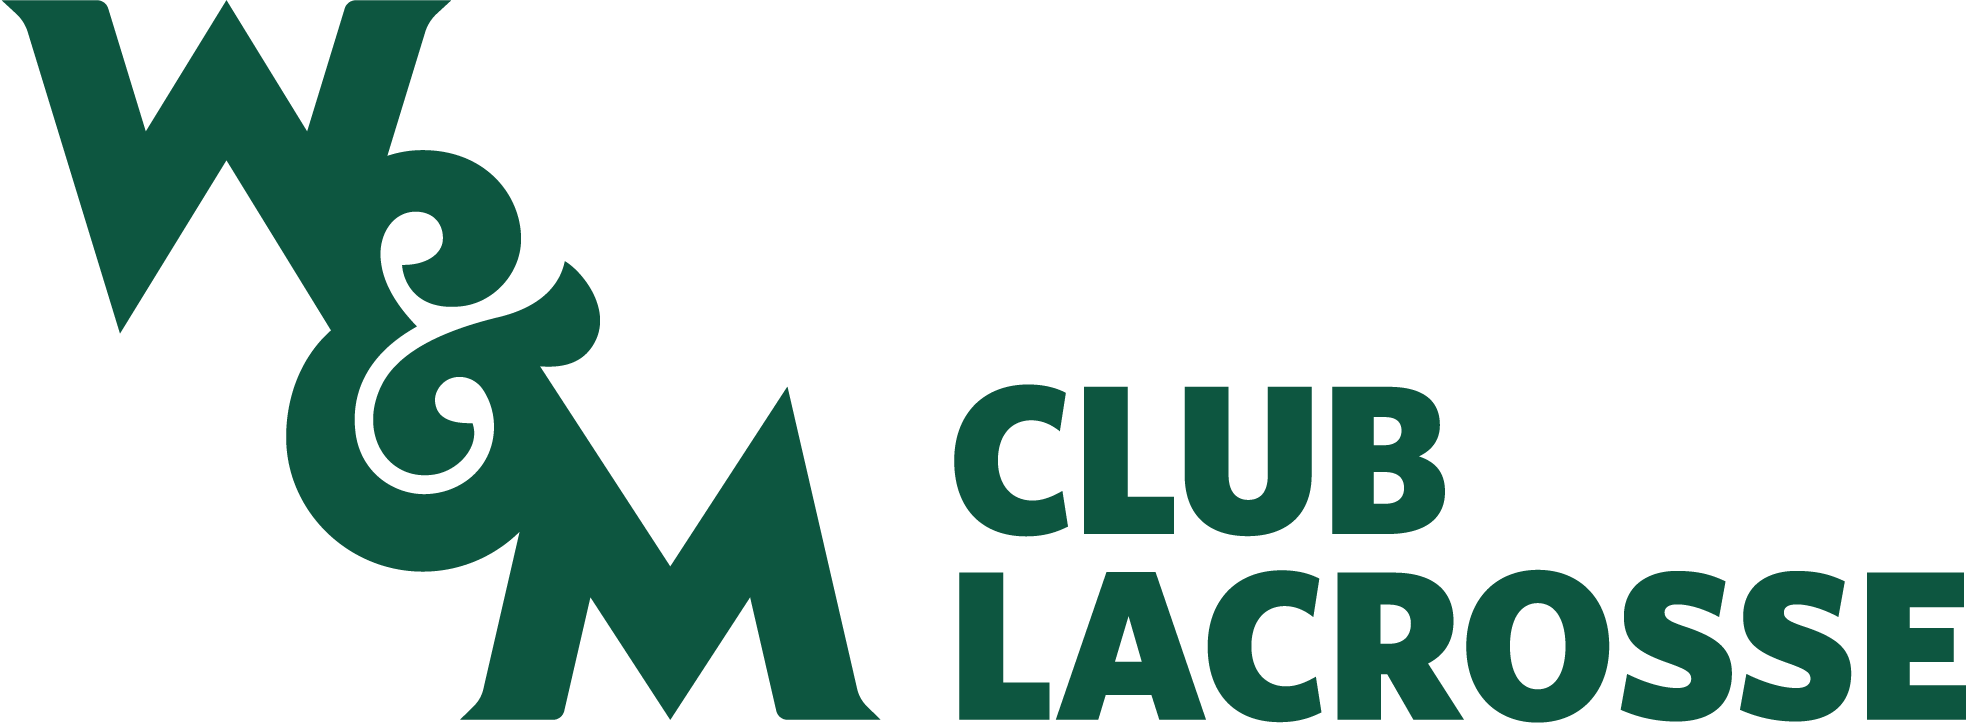 Club Lacrosse Logo